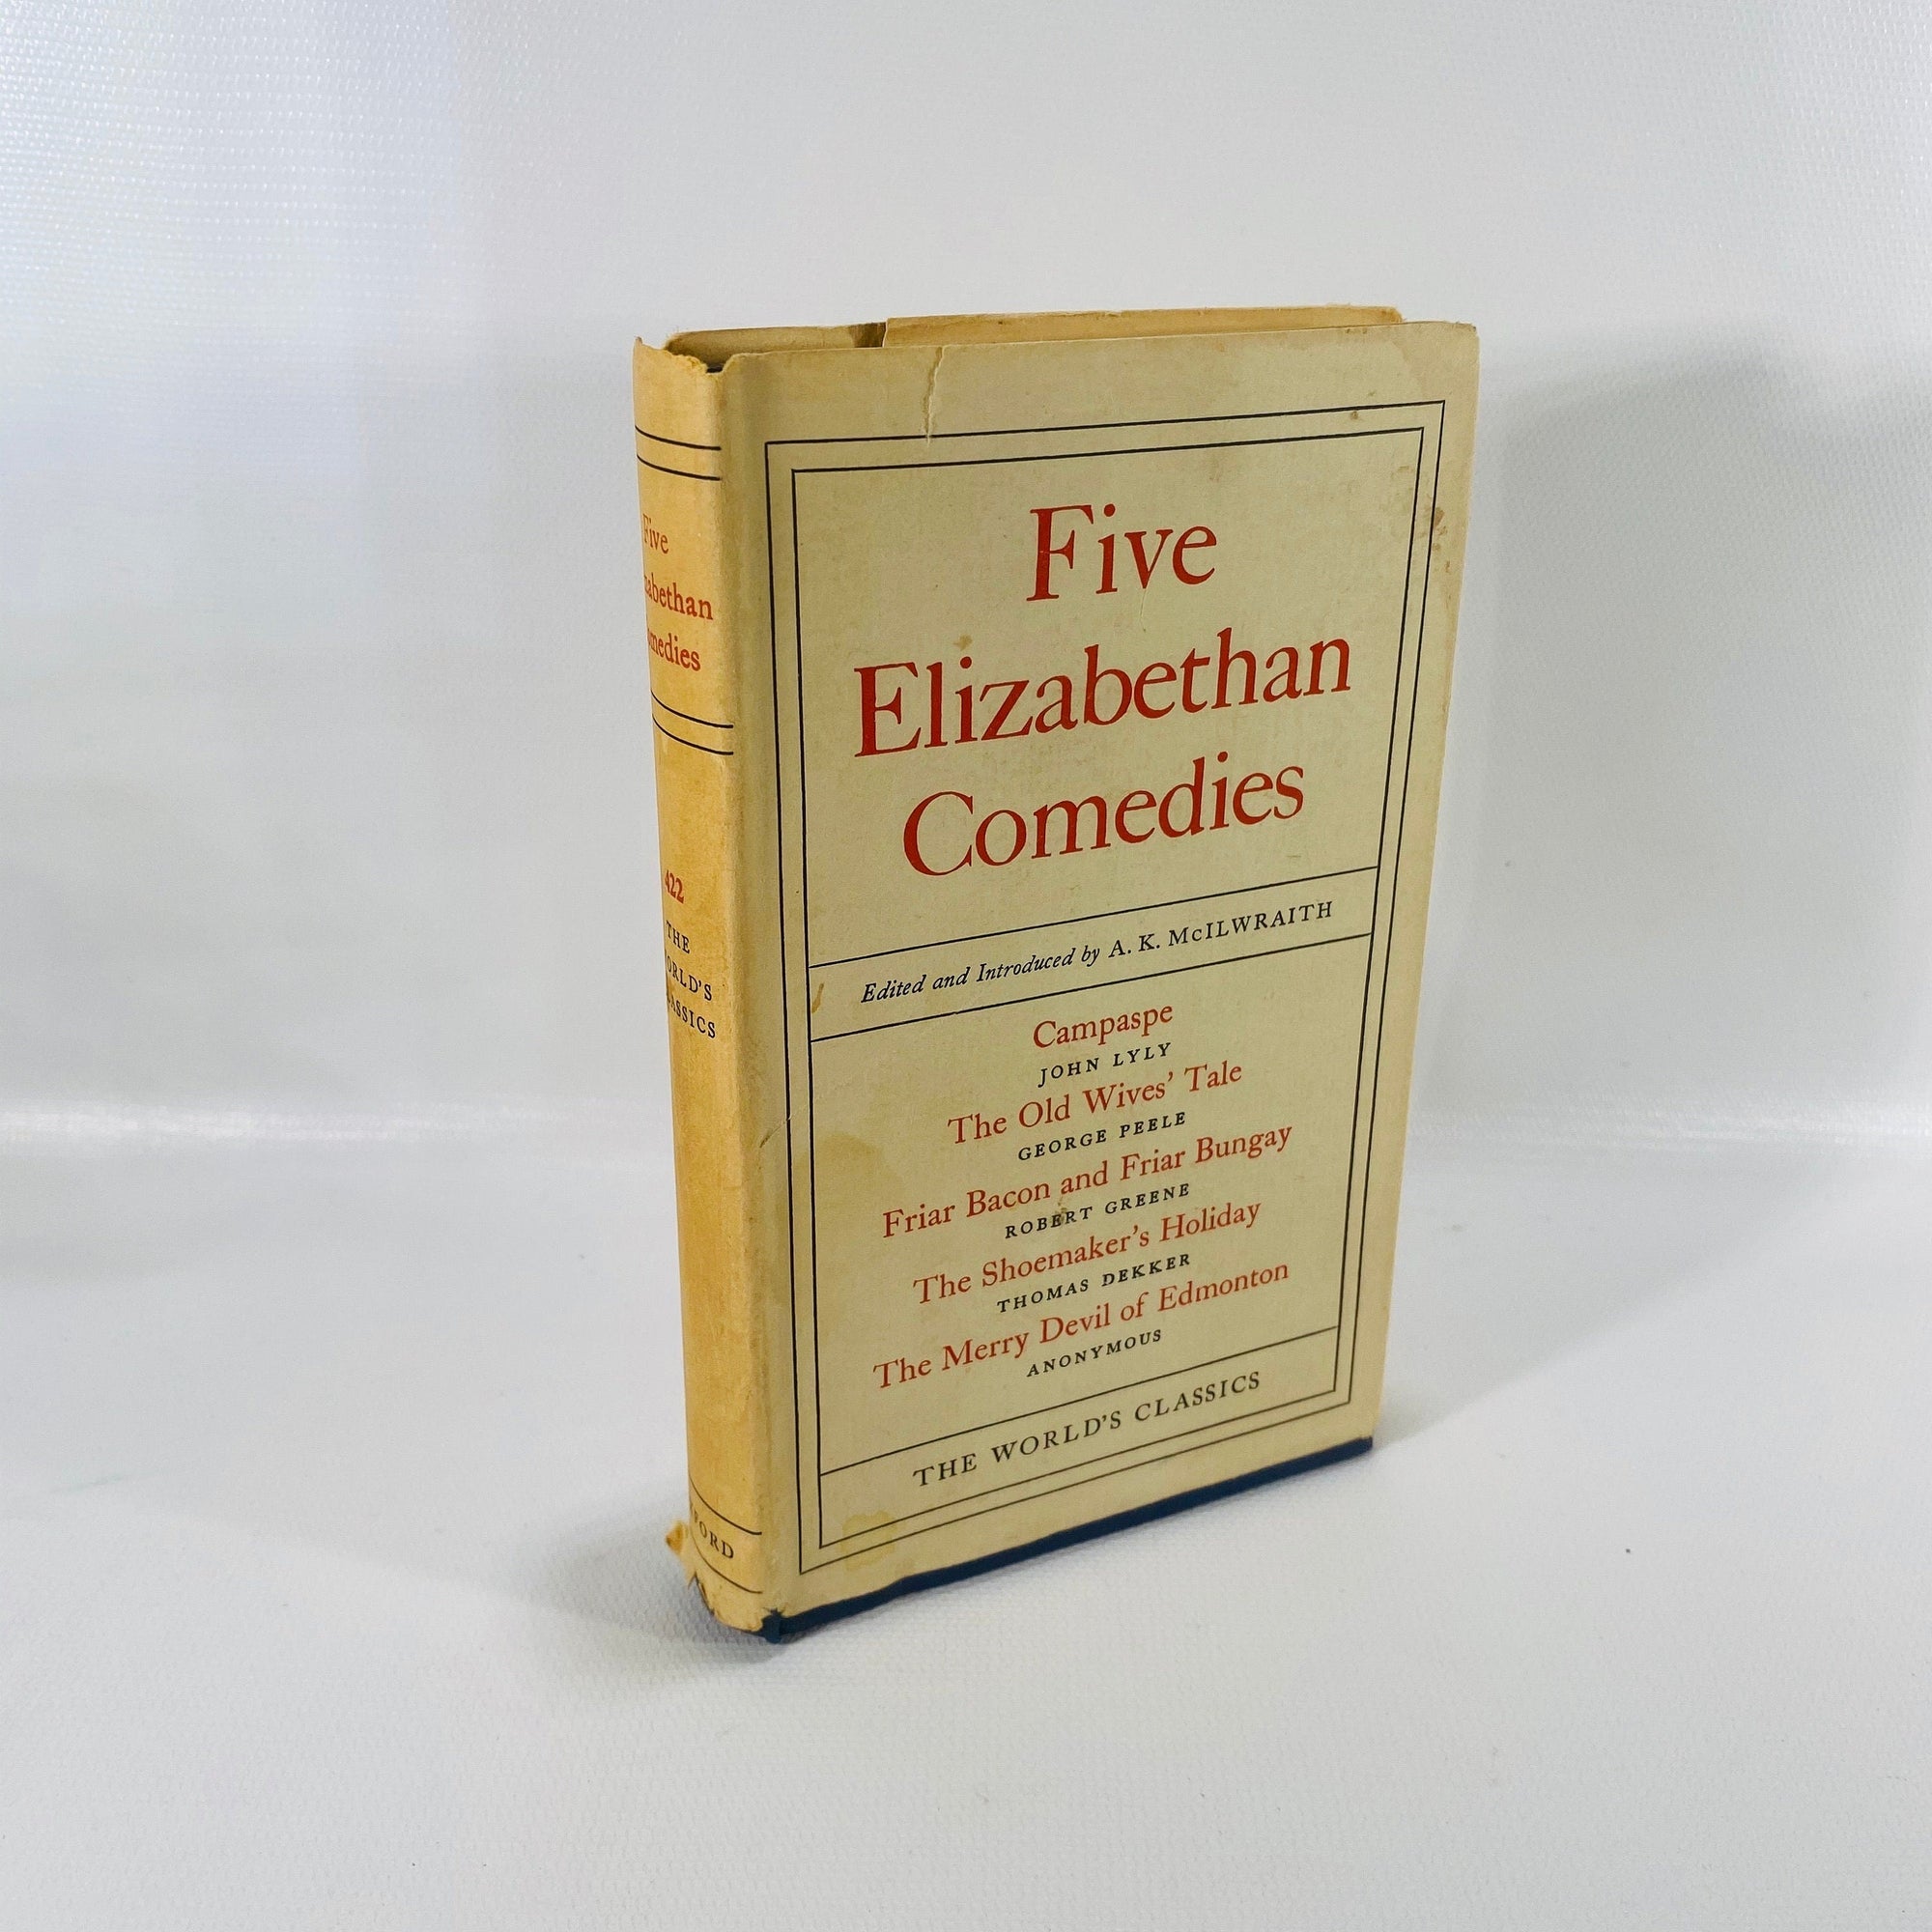 Five Elizabethan Comedies Edited by A.K. MicIlwraith 1962 Vintage Book